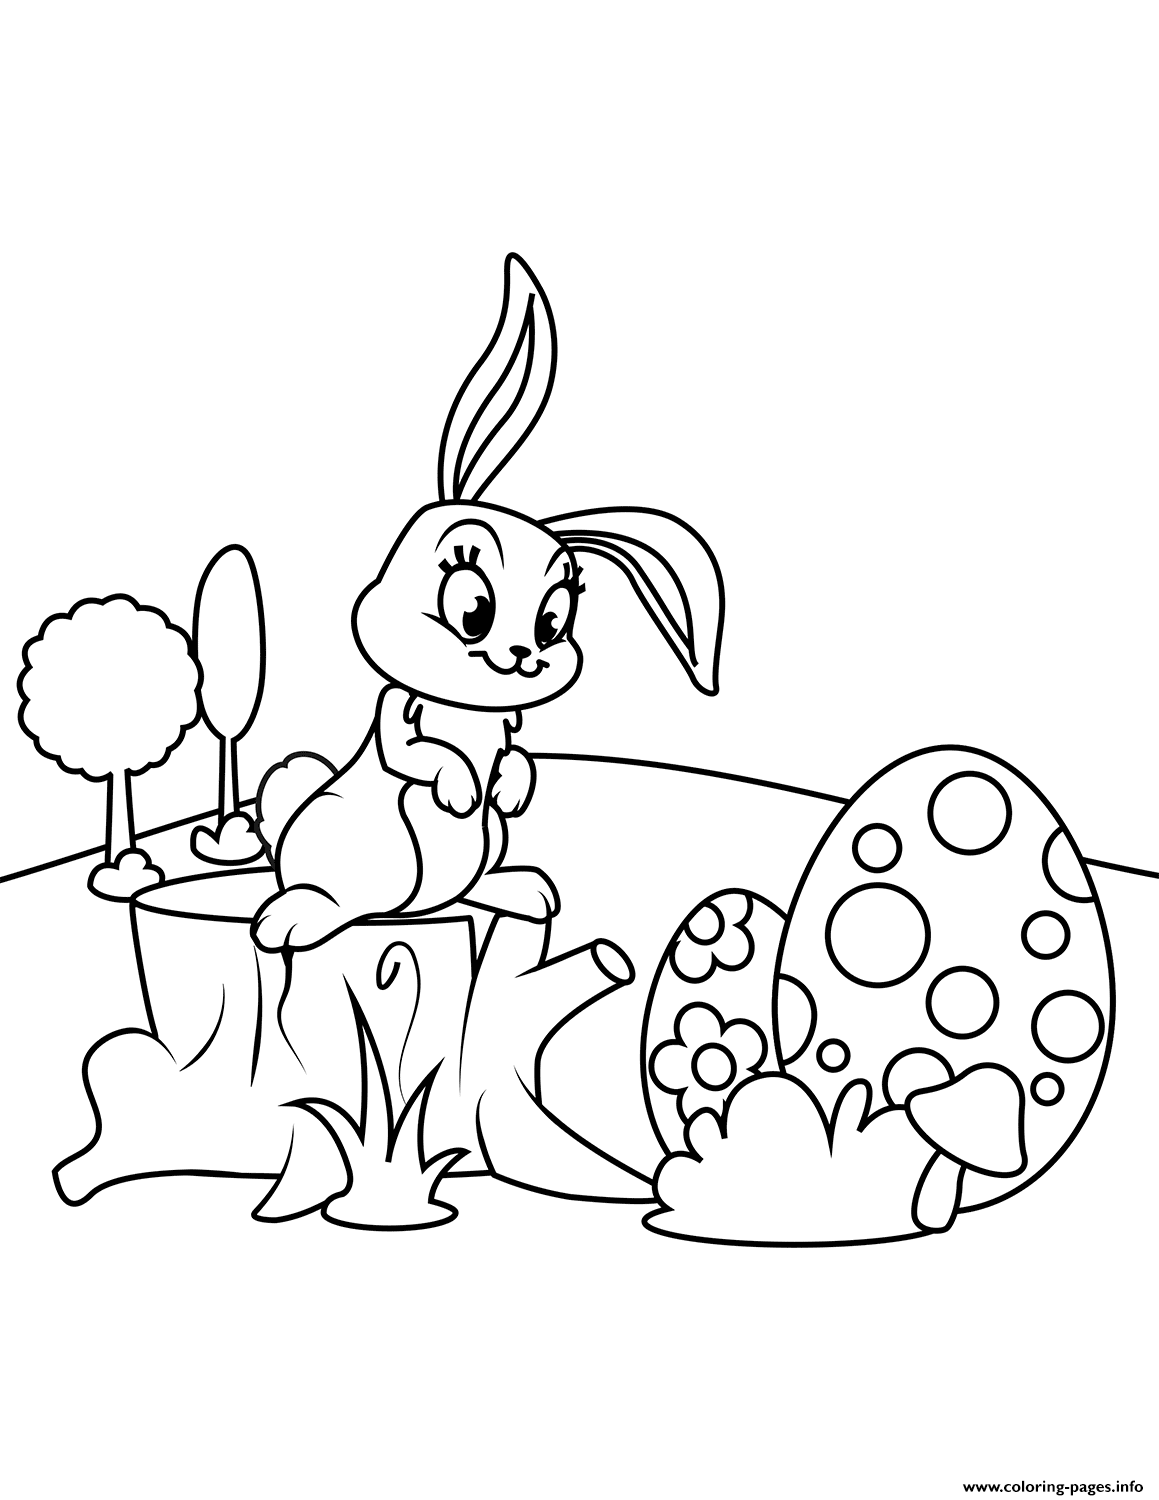 Cute Easter Bunny On Hemp coloring